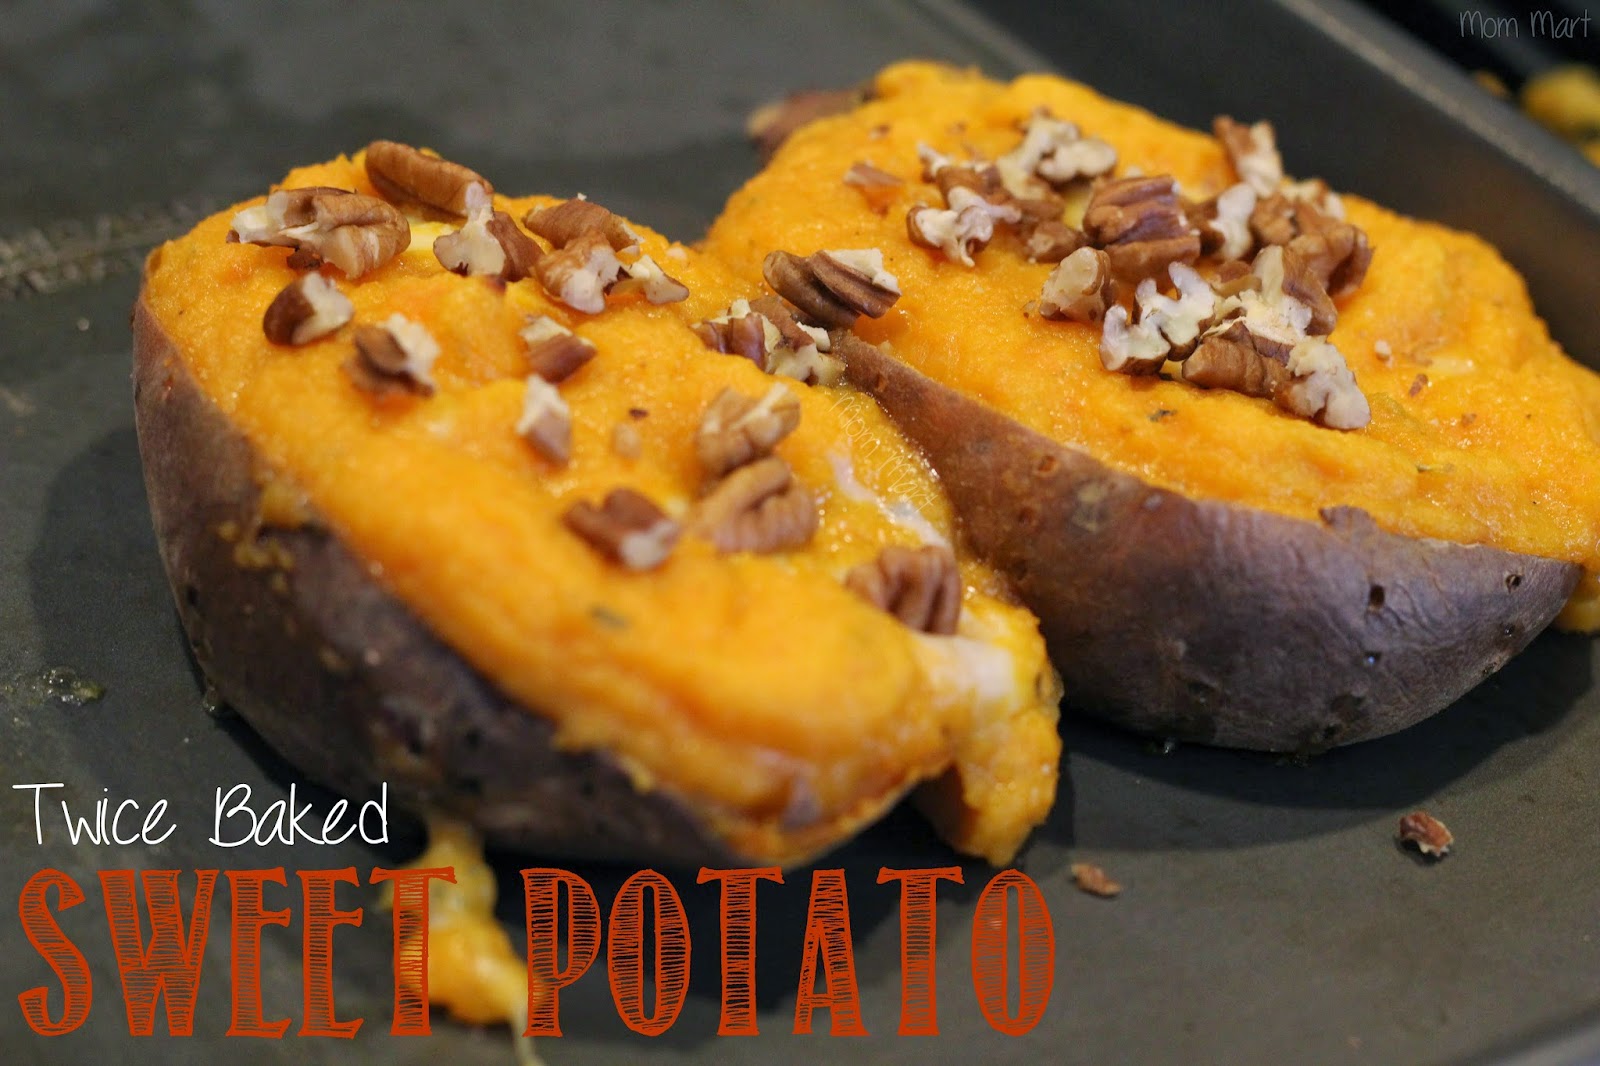 Twice Baked Sweet Potatoes  #Recipe #Tutorial #Foodie #YUM